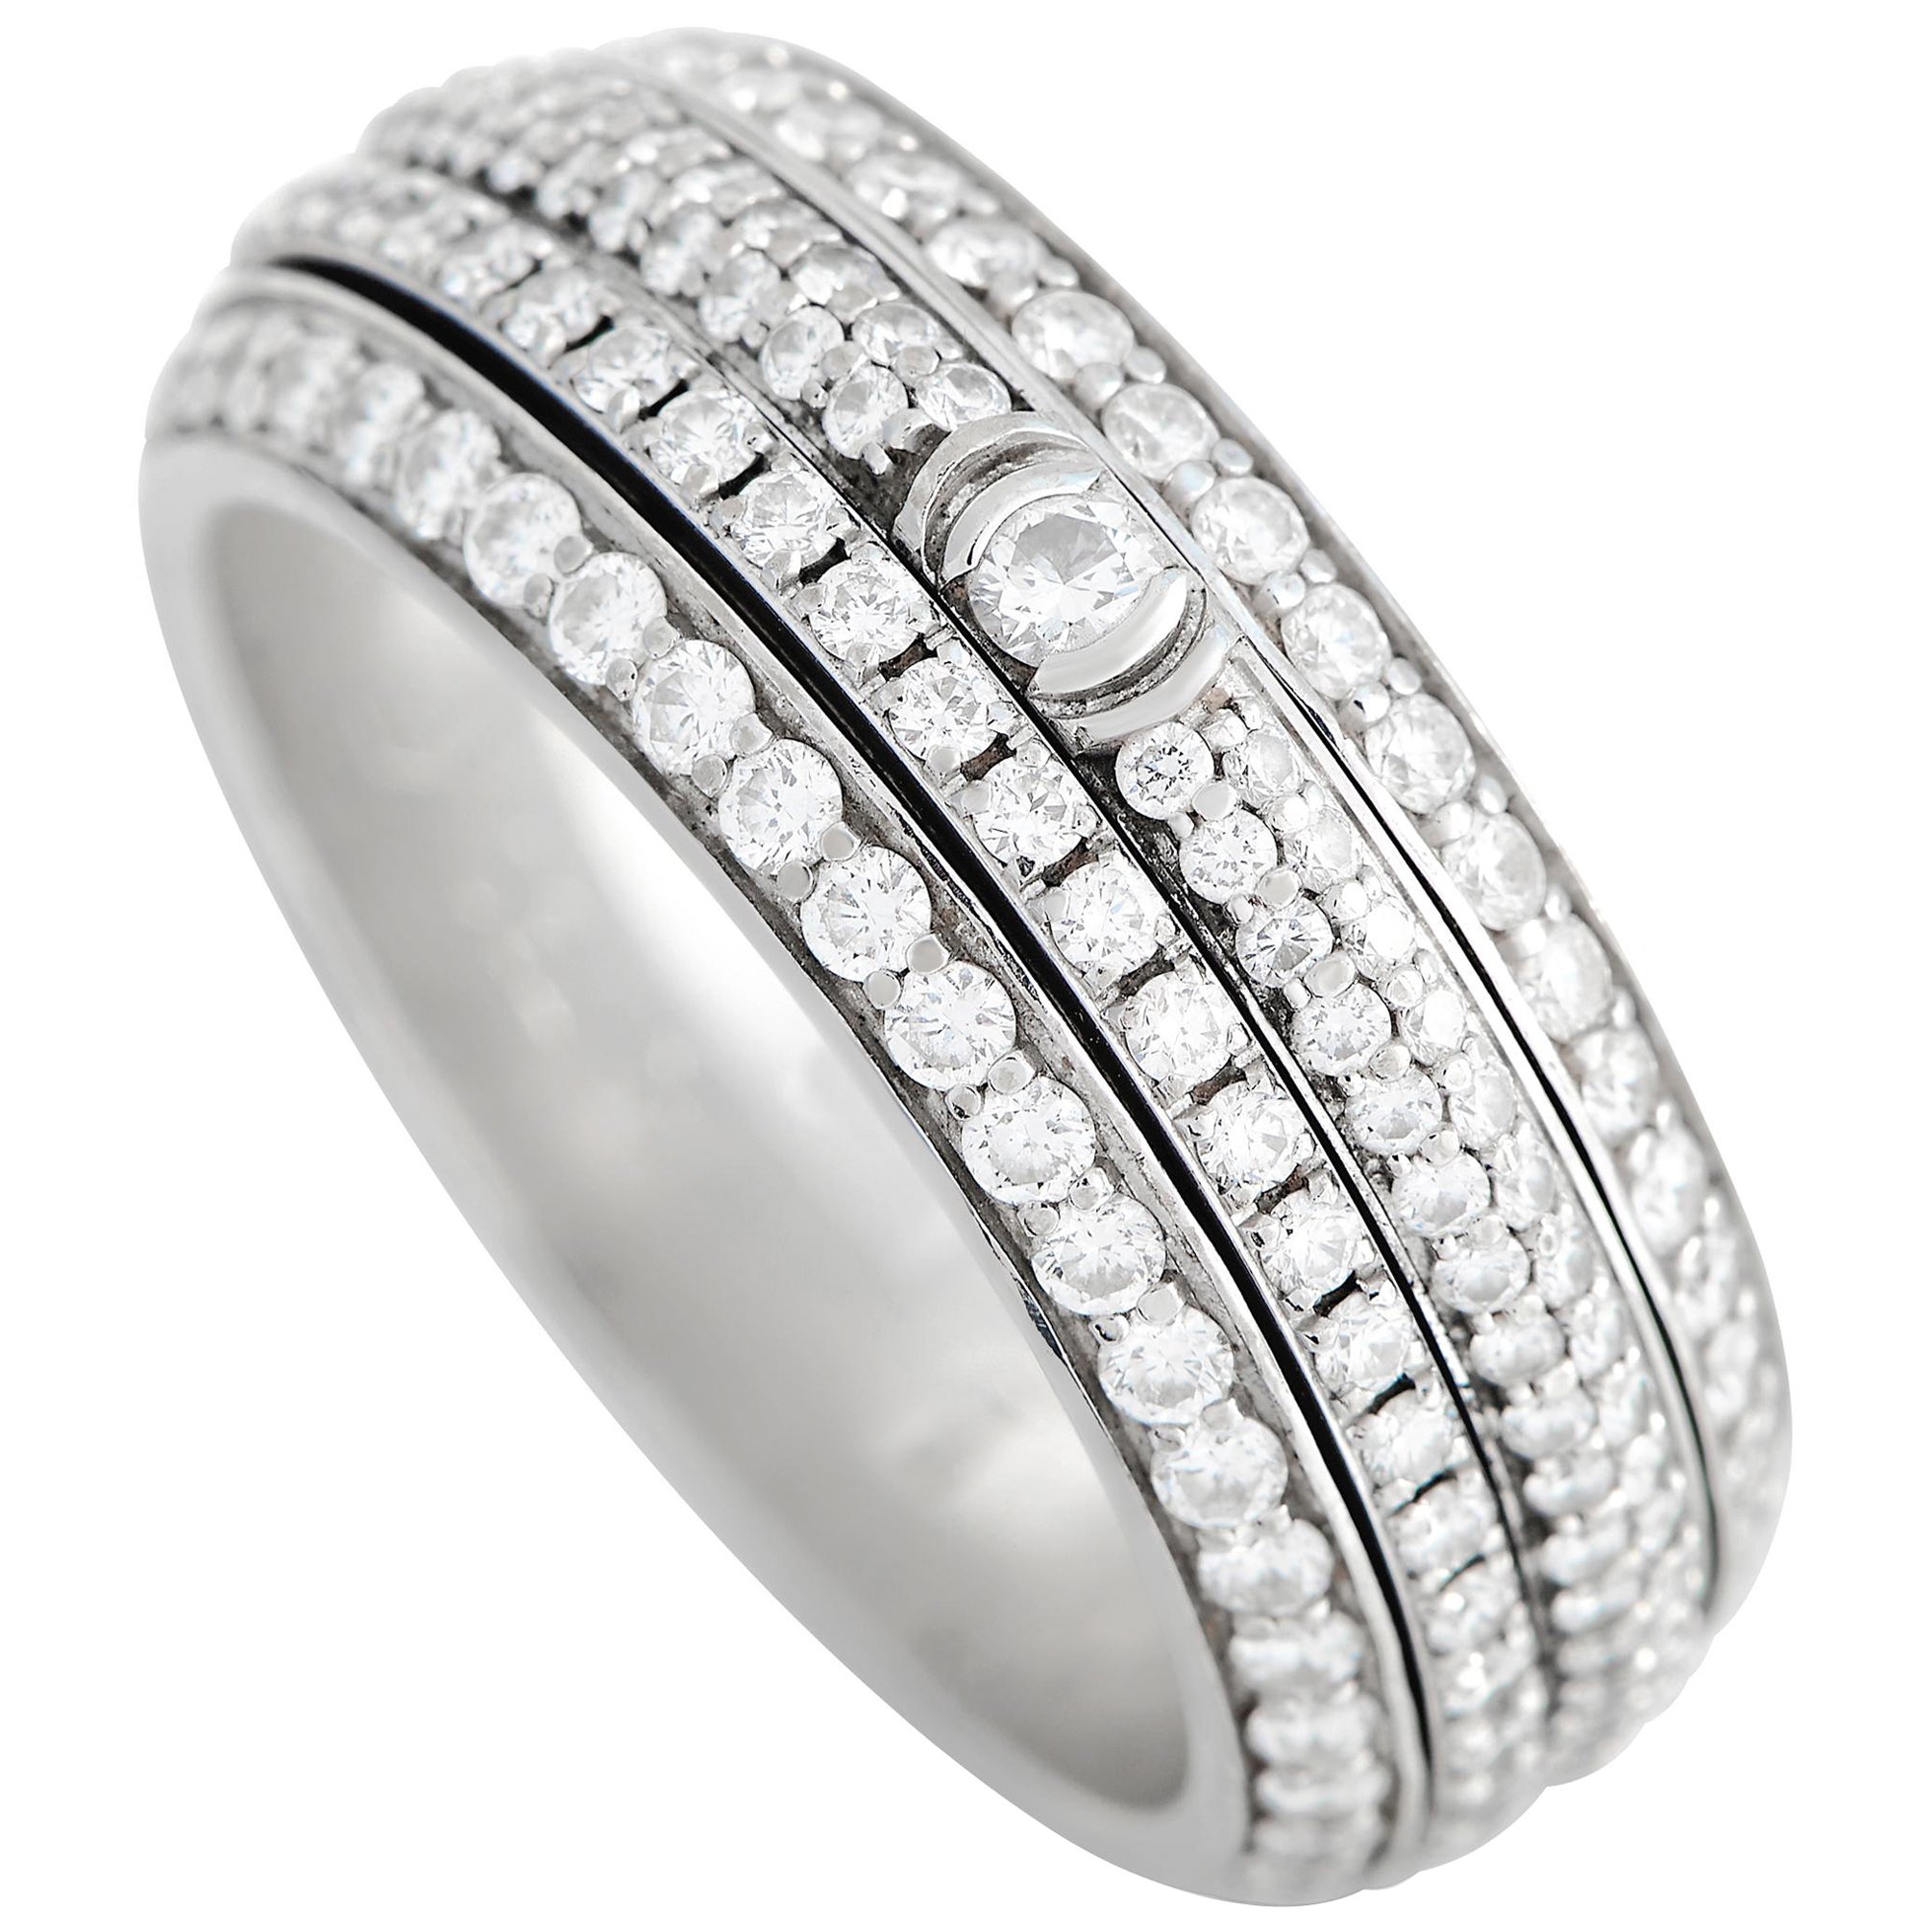 Piaget Possession 18k White Gold 2.24 Carat Diamond Ring